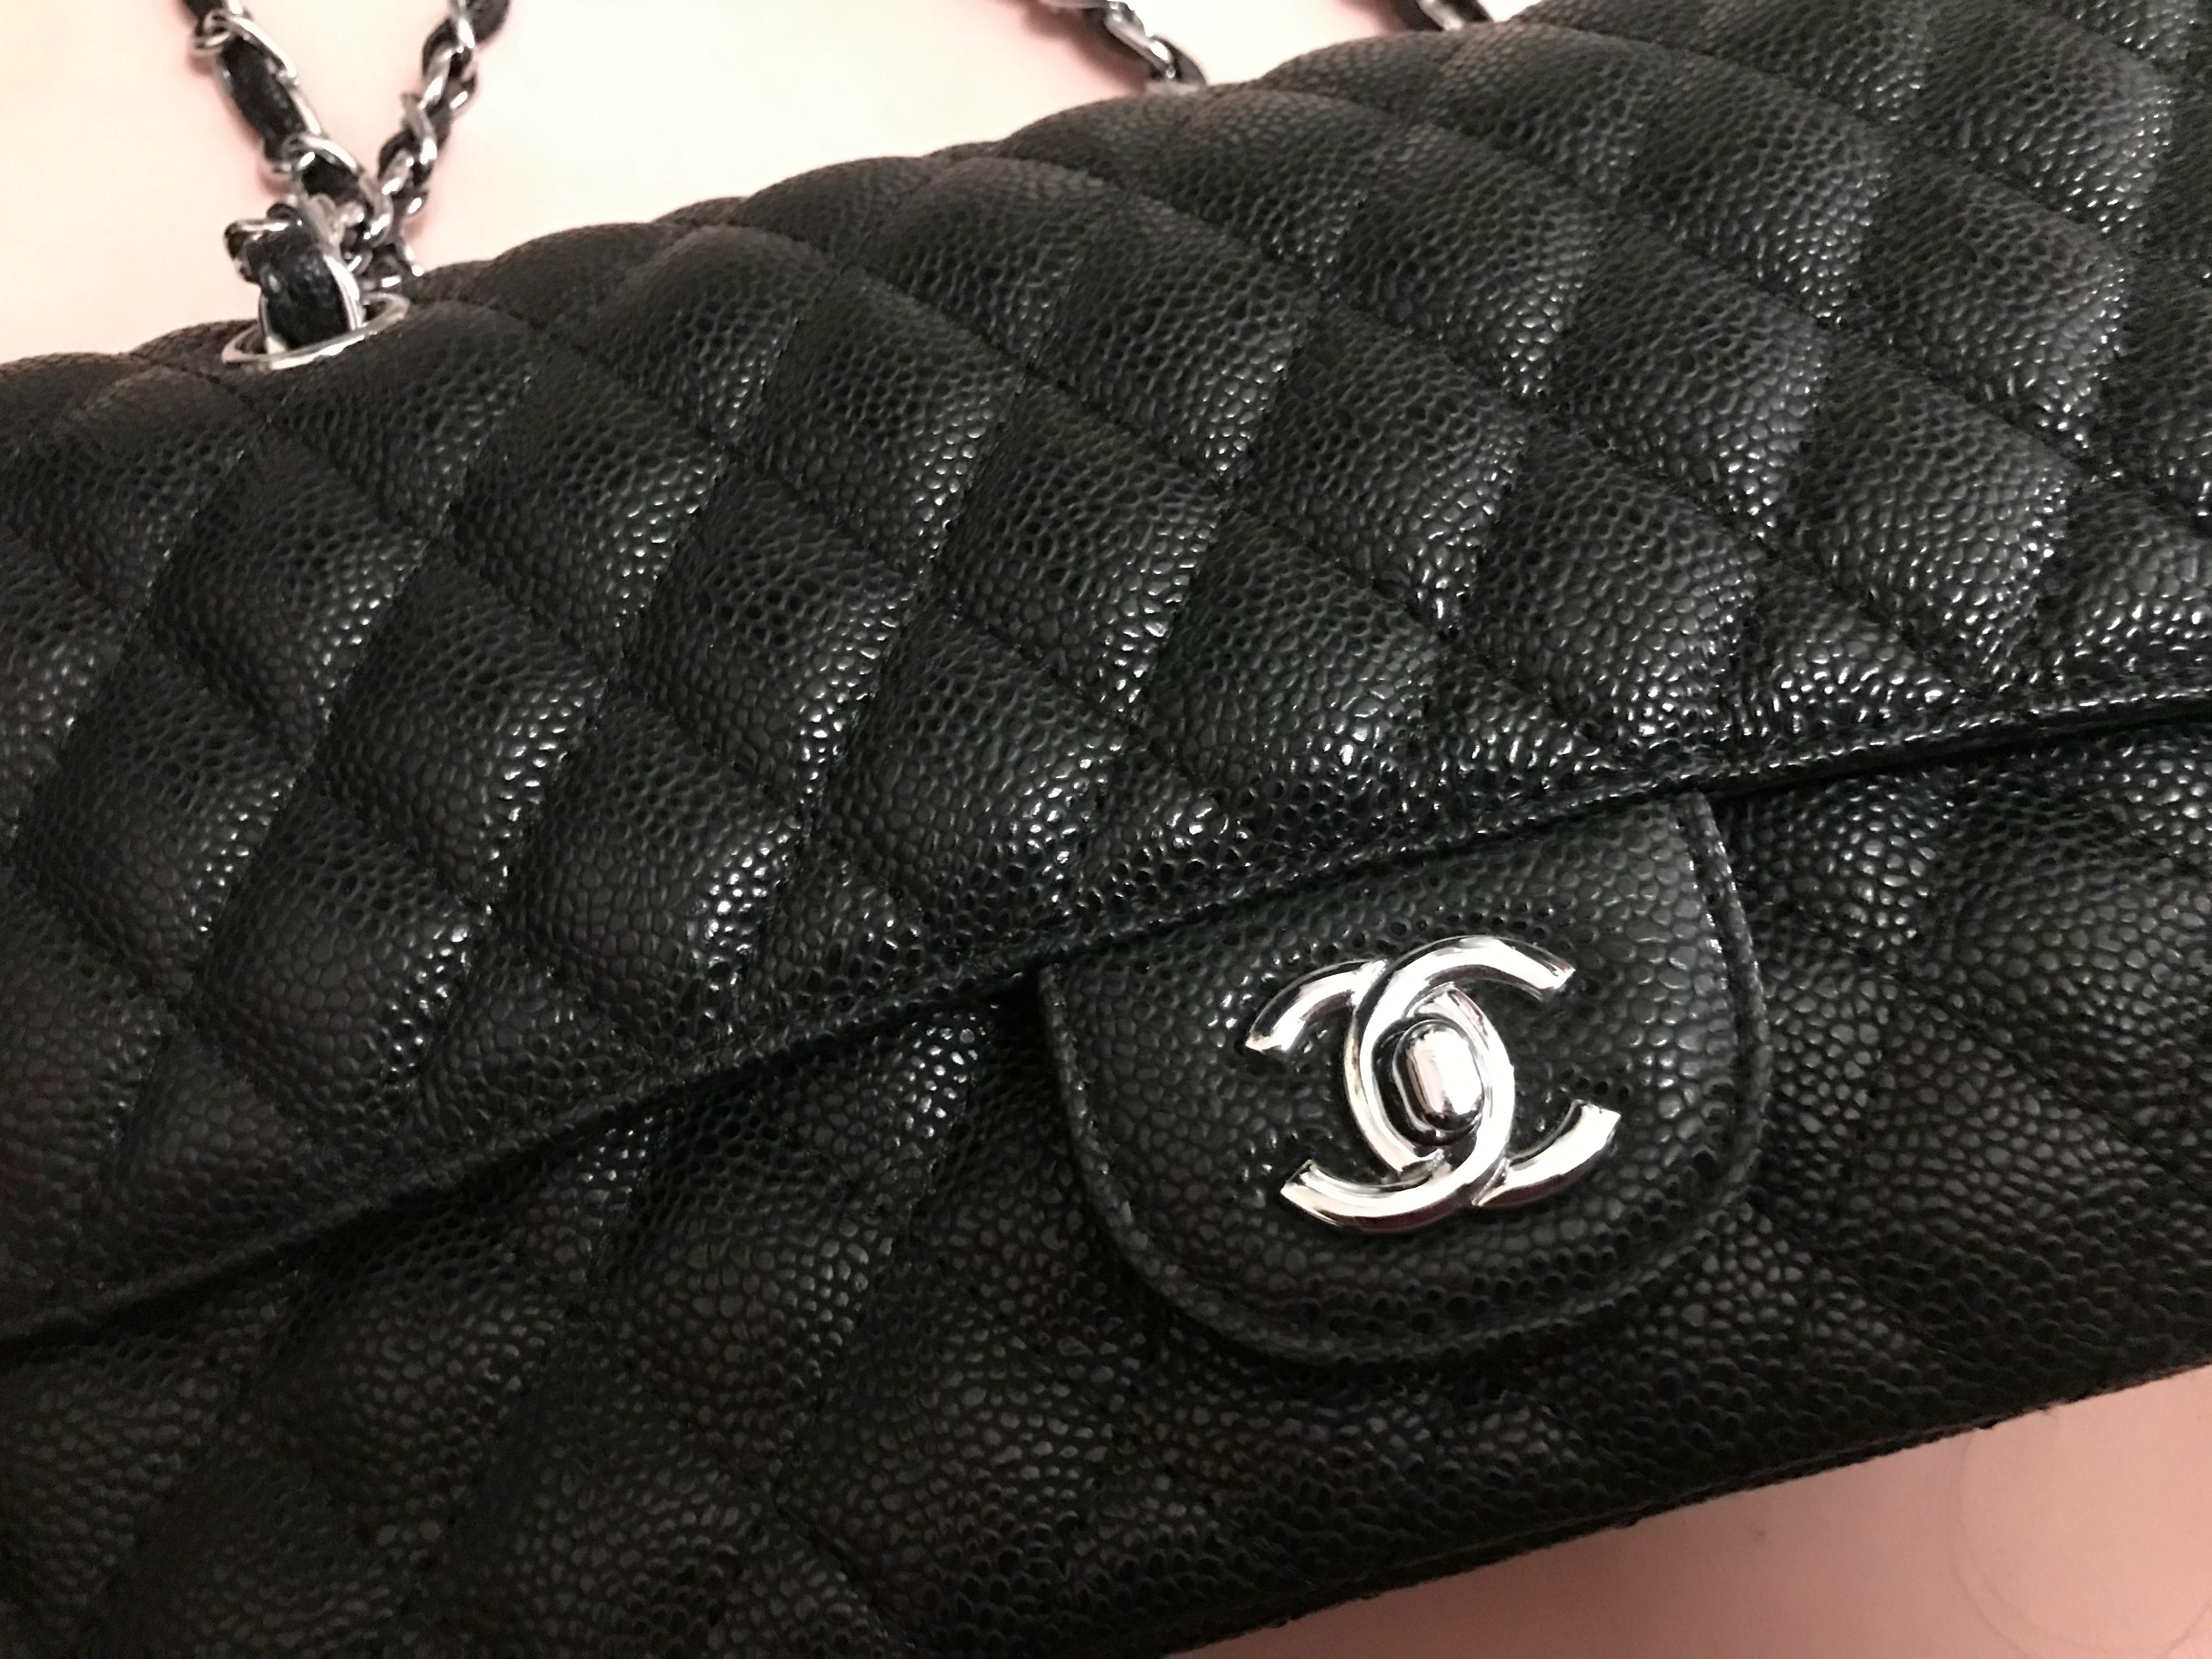 Chanel 19 leather handbag Chanel Black in Leather - 39258285